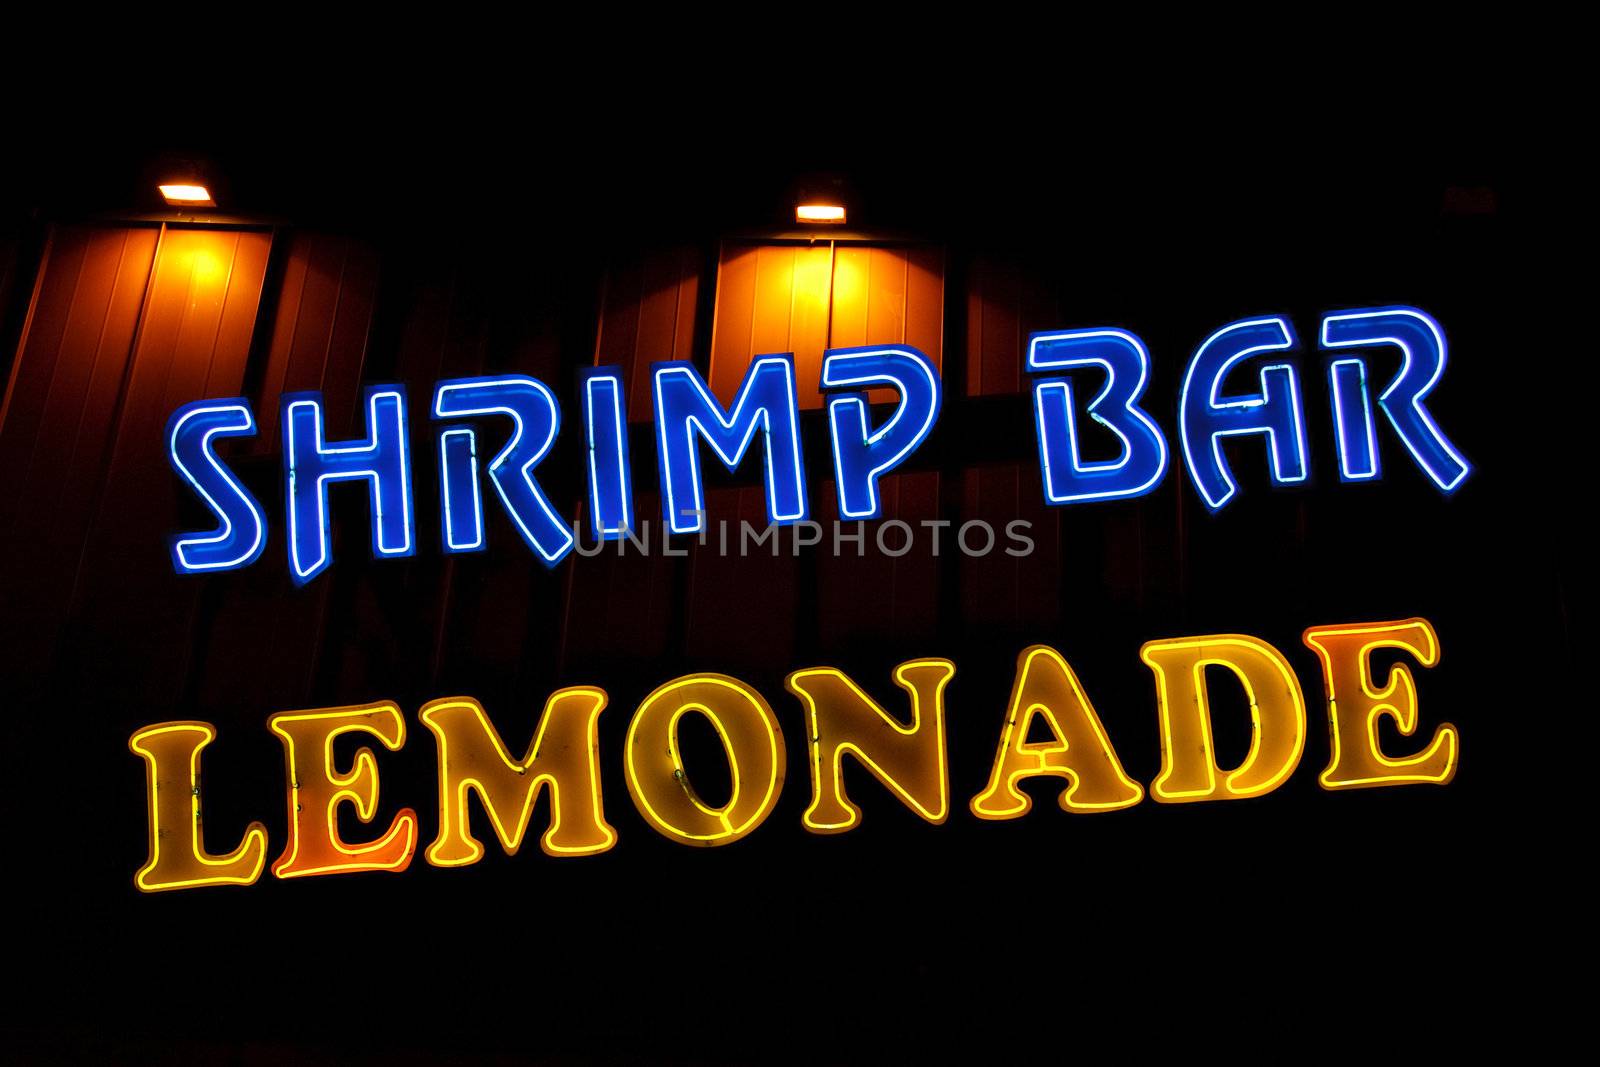 Shrimp Bar and Lemonade neon sign in front of a restaurant